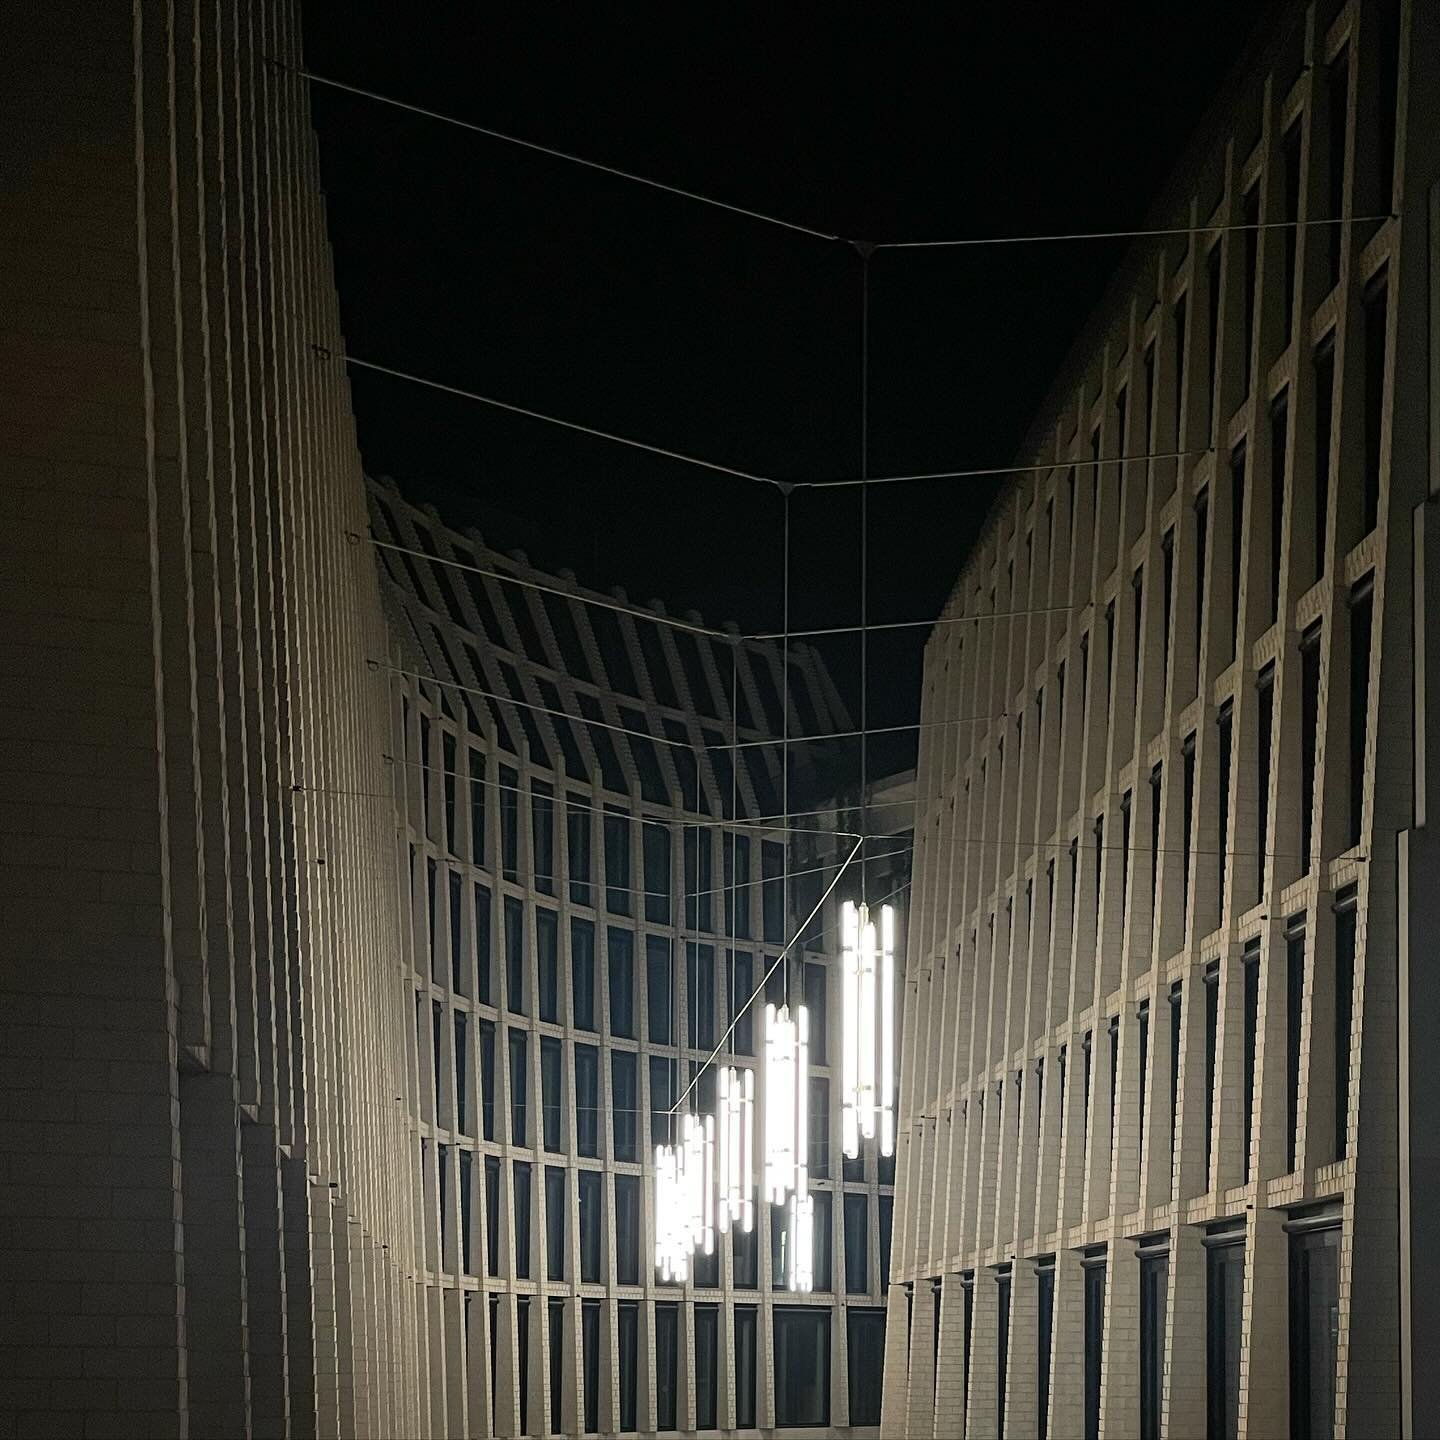 into the night.
&mdash;

#amtacheles #herzogdemeuron #streetlight #lightdesign #facadelovers #minimalism #minimalist #minimal #minimal_perfection #architecture_minimal #1_unlimited #architecture #architecture_hunter #shotoniphone #ig_mnms #uniqlaxori